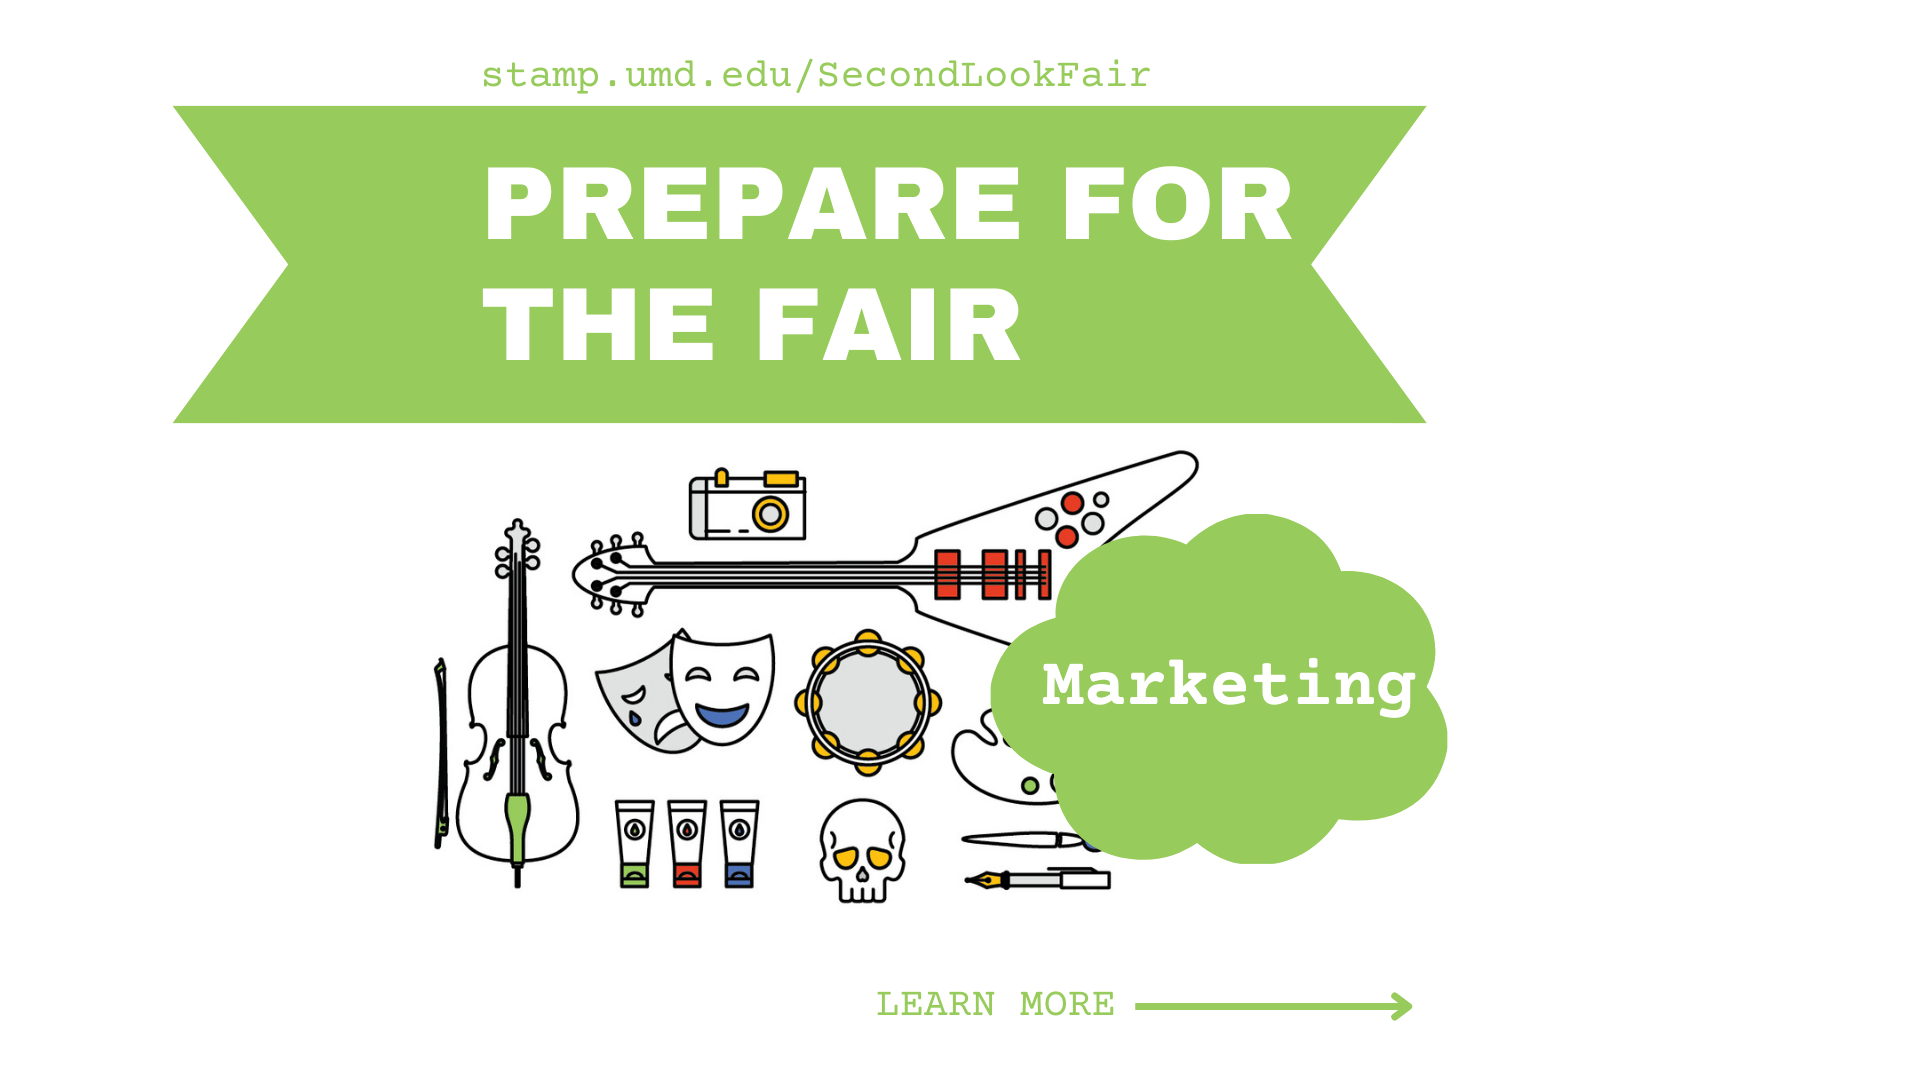 Prepare for the fair - marketing